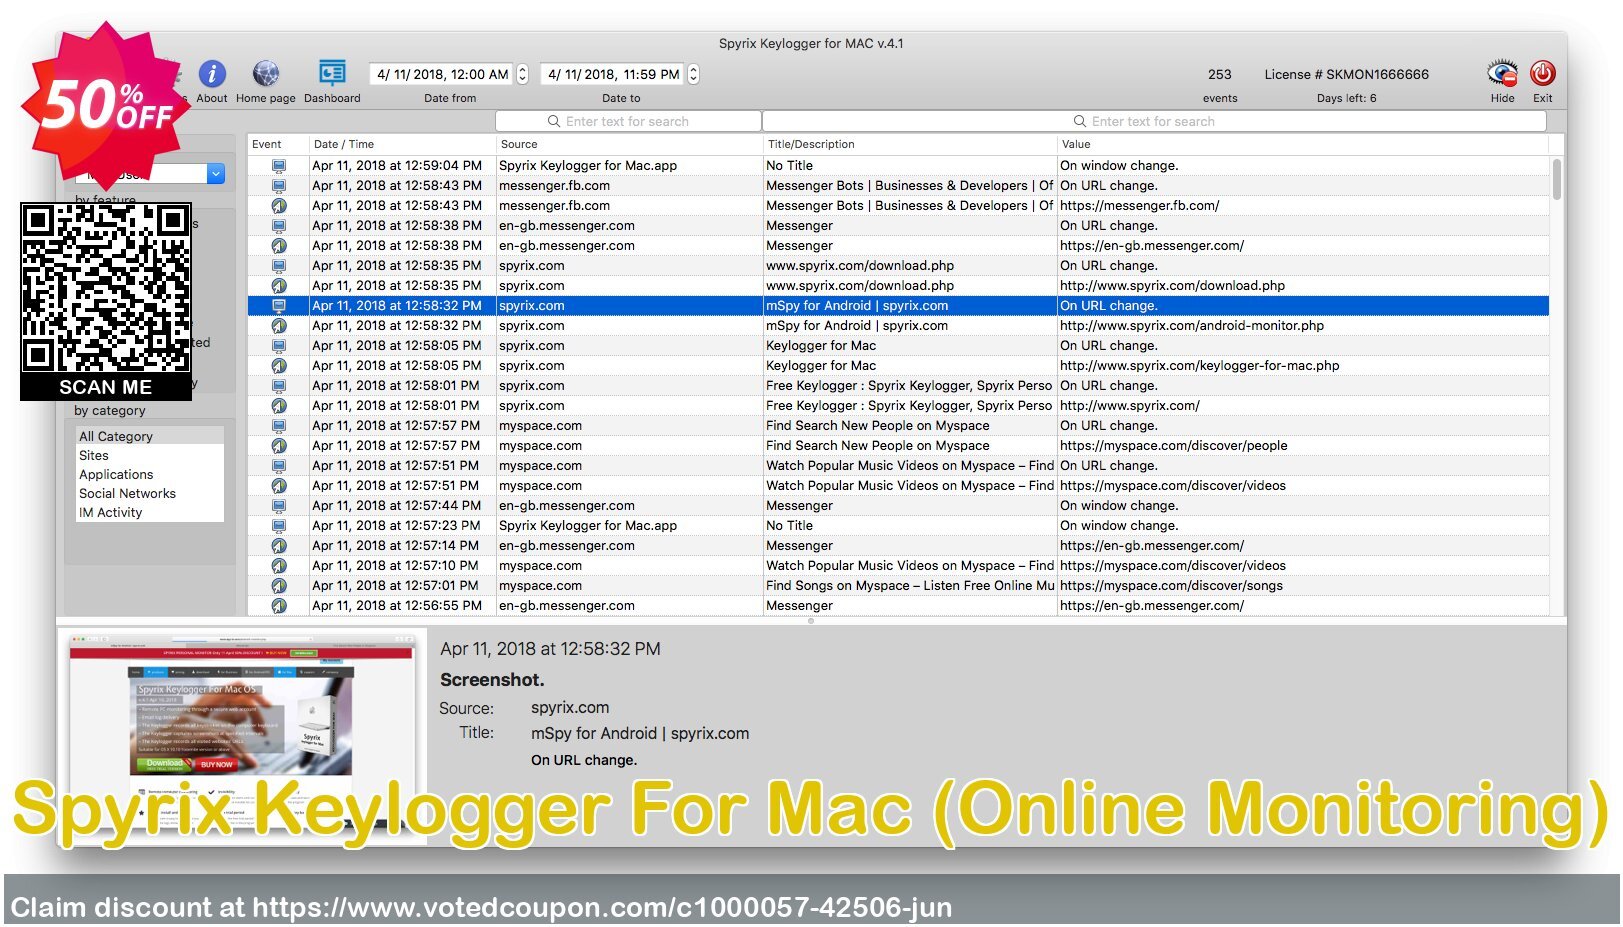 Spyrix Keylogger For MAC, Online Monitoring 